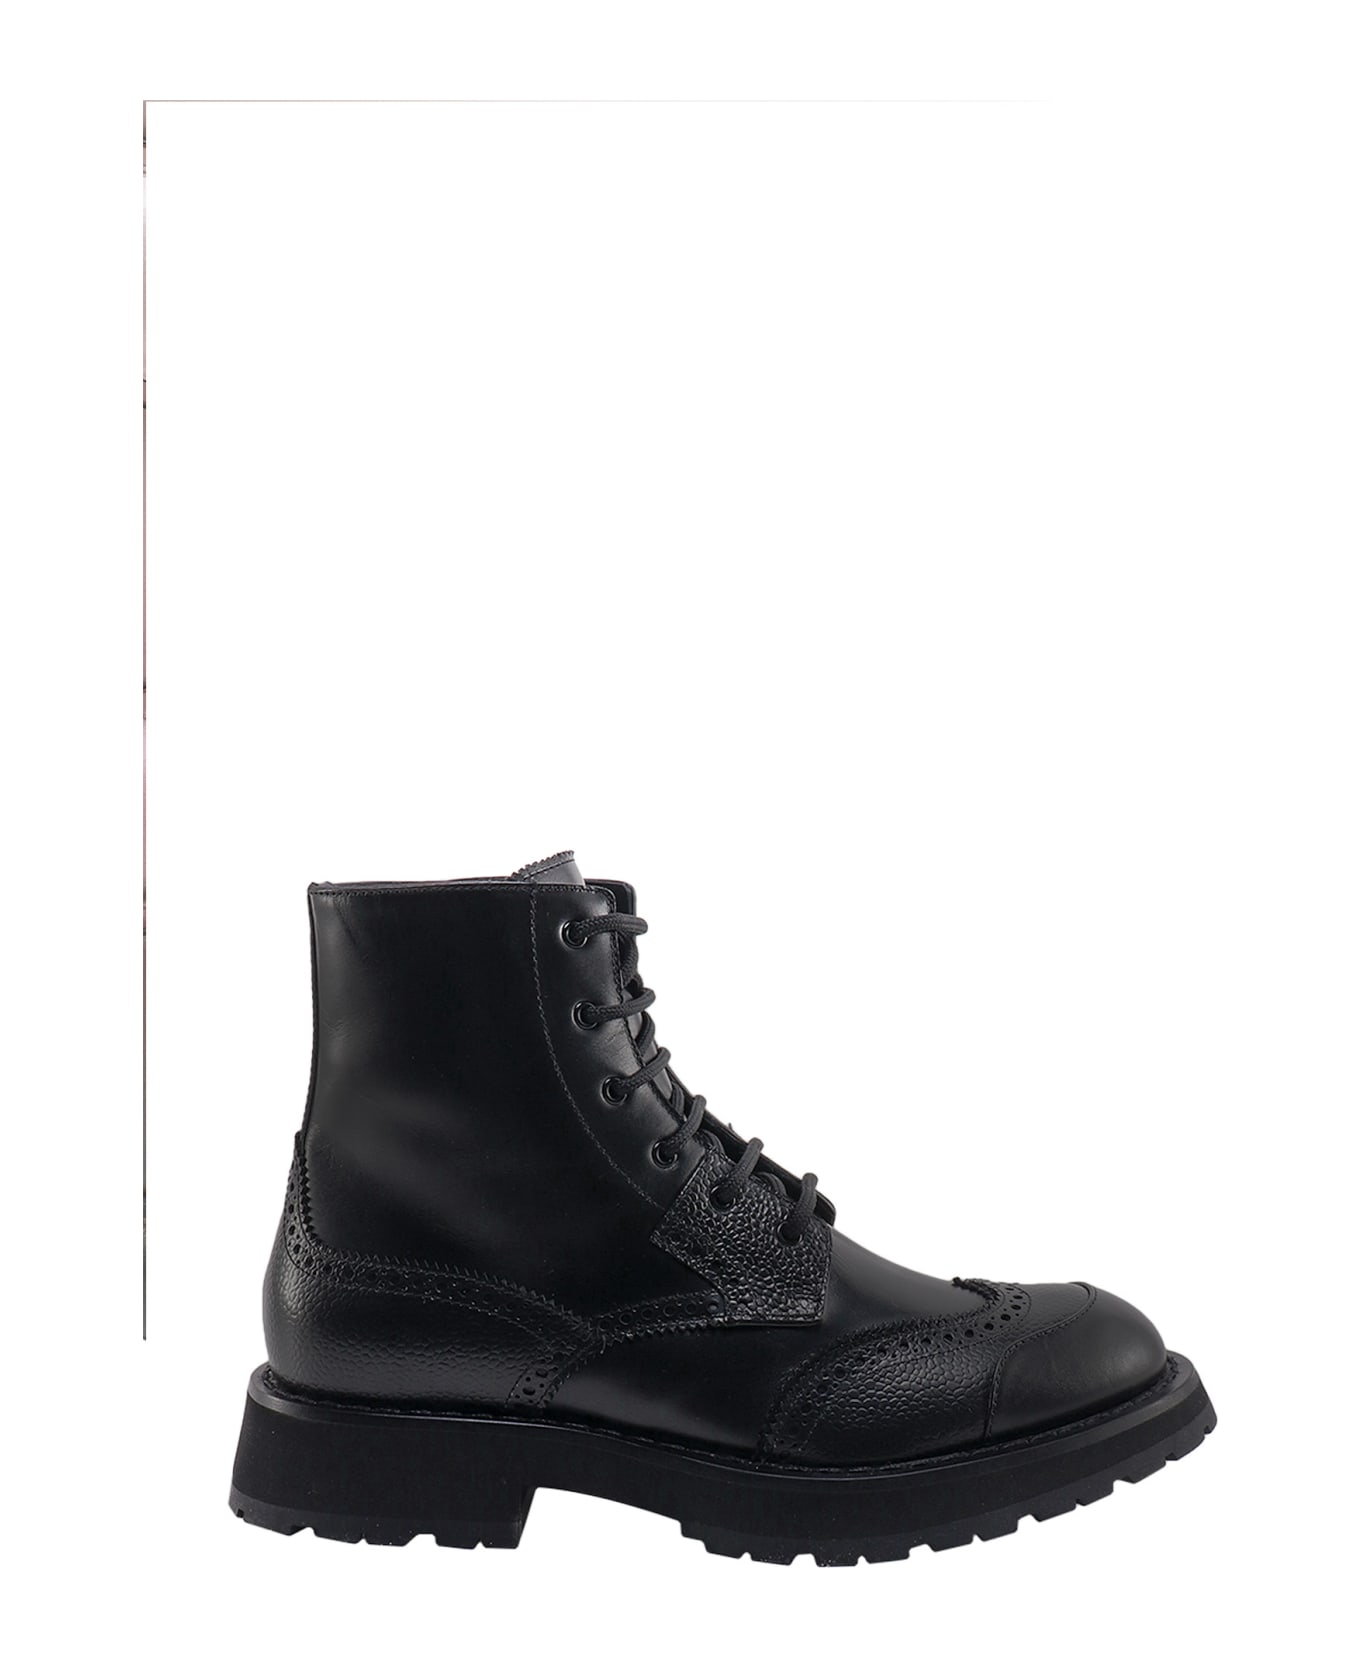 Alexander McQueen Punk Worker Boots - Black ブーツ